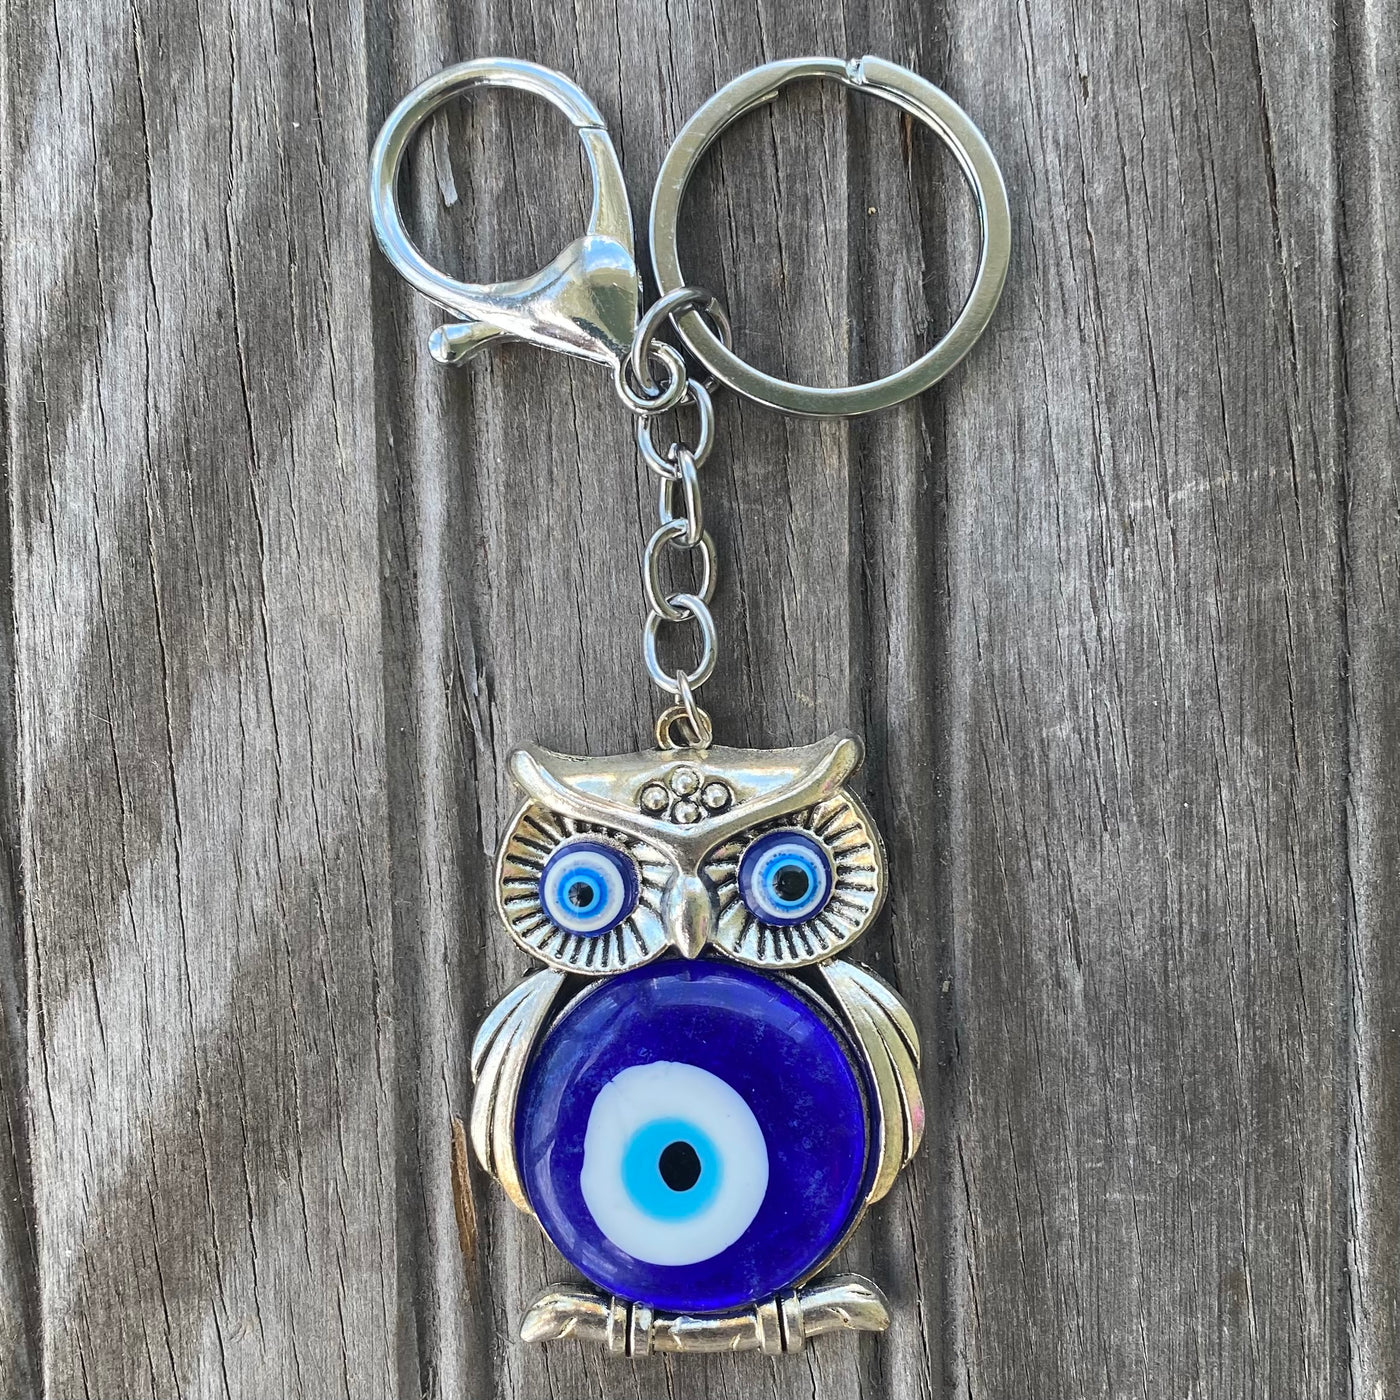 Watching Owl Evil Eye keychain